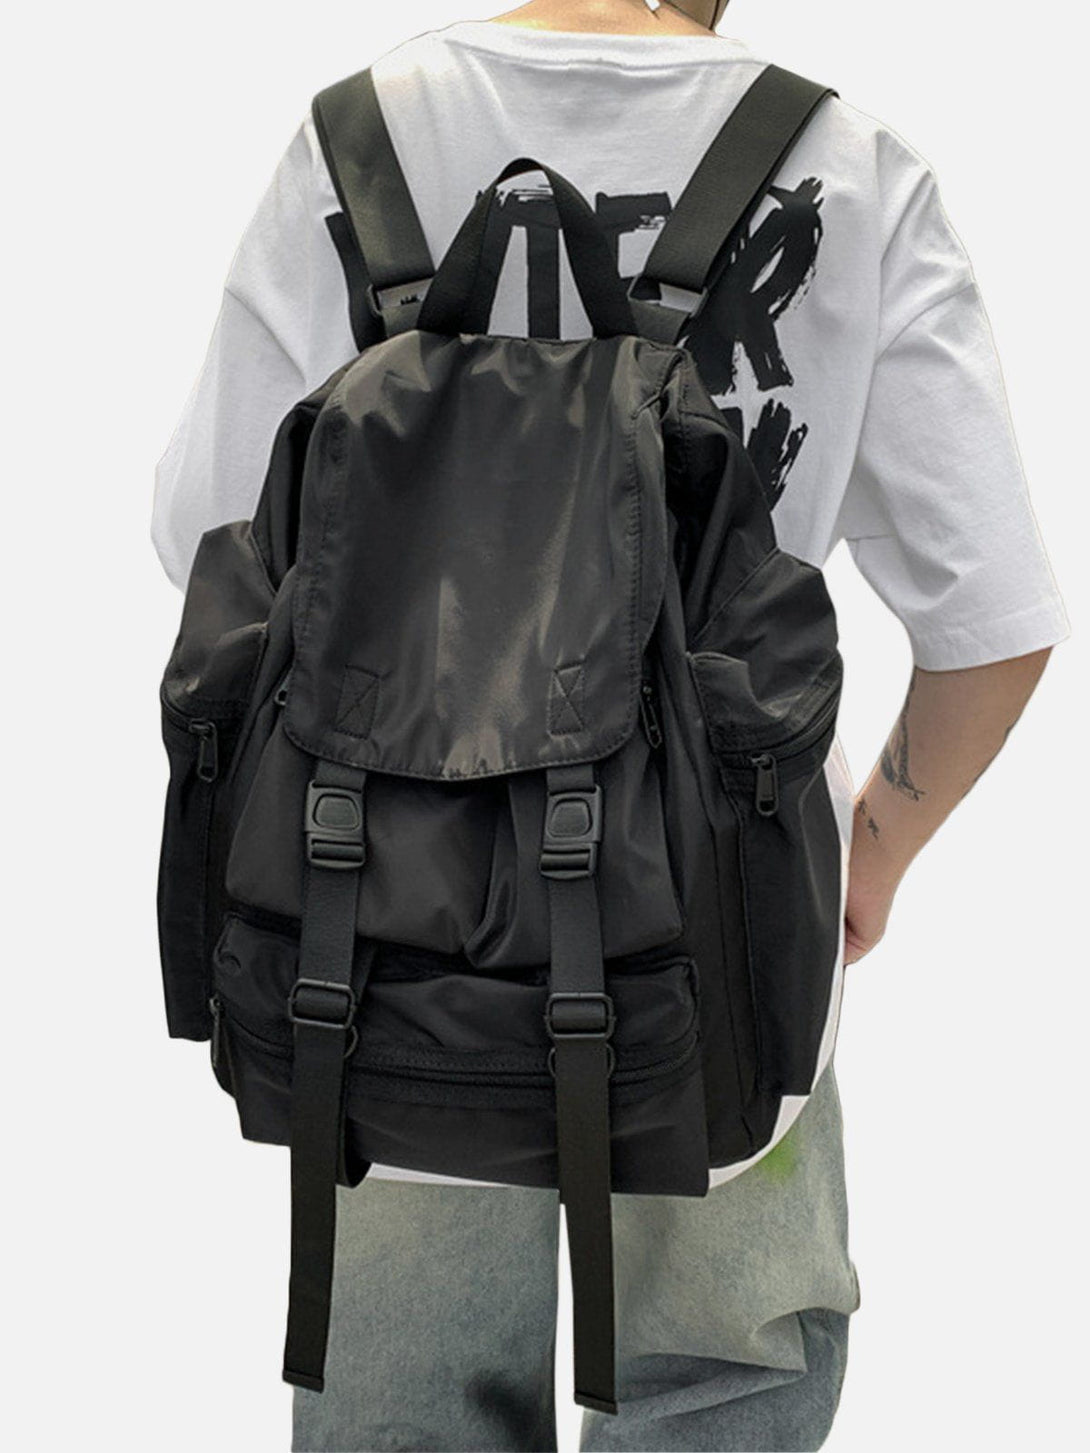 Majesda® - High Capacity Backpack- Outfit Ideas - Streetwear Fashion - majesda.com